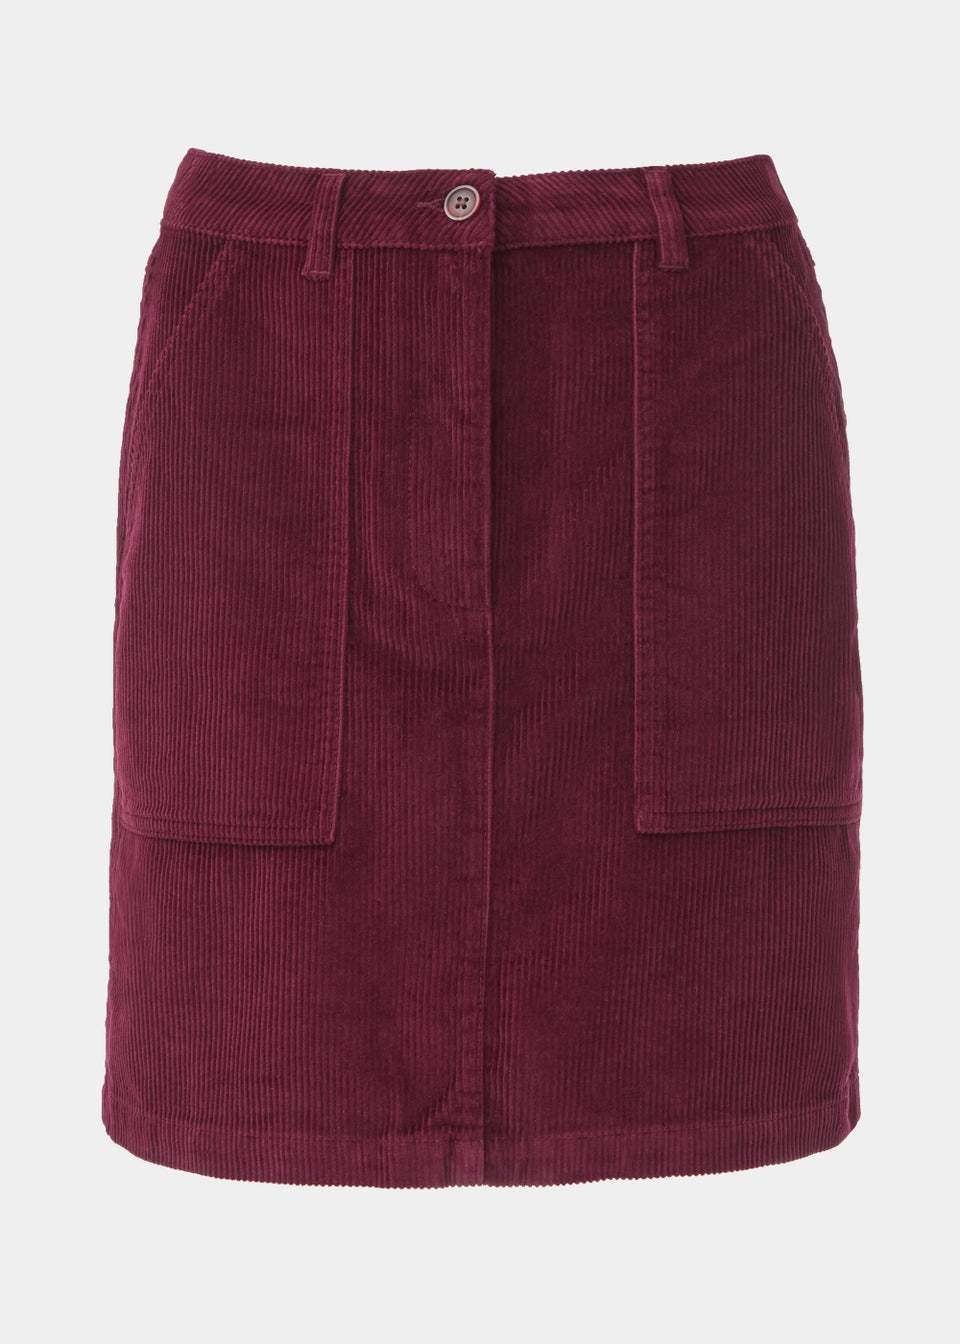 Burgundy Cord Mini Skirt